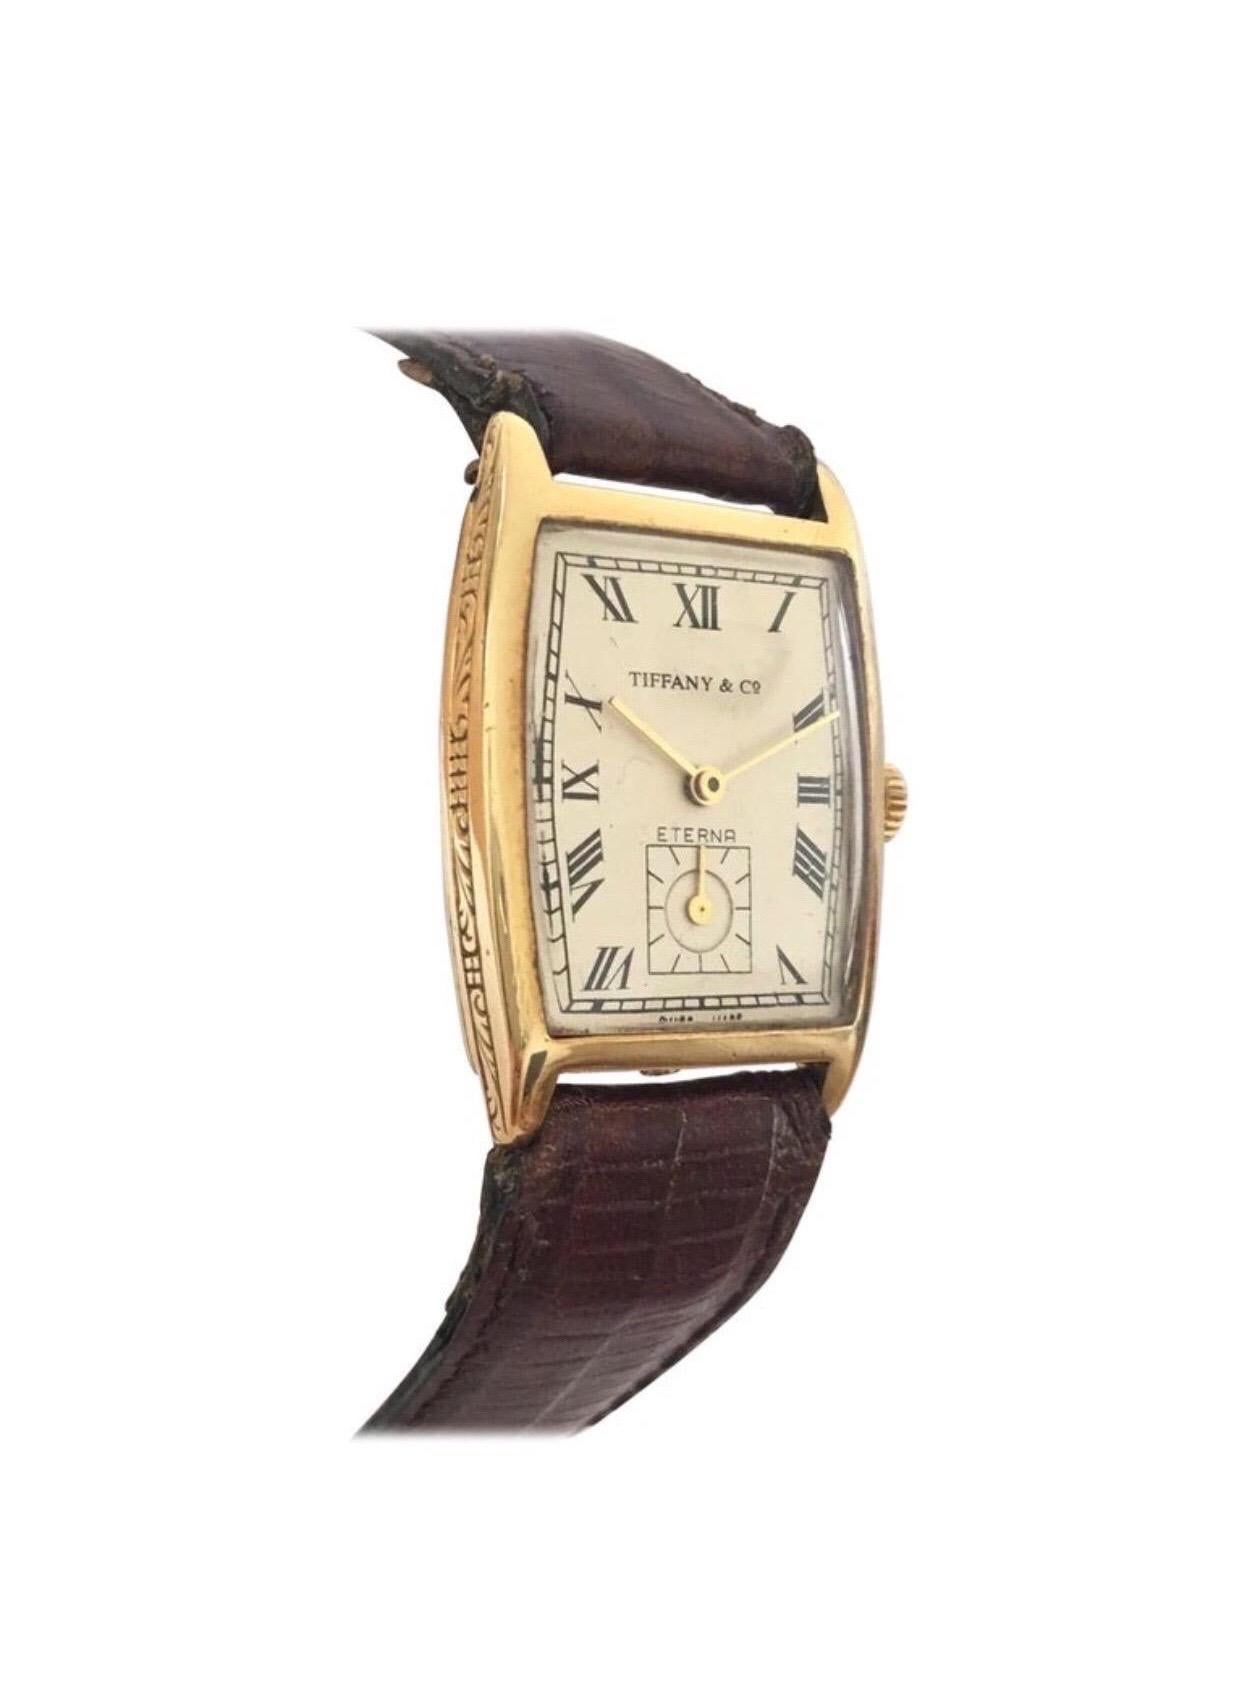 1920s Vintage 18 Karat Gold Tiffany & Co. Eterna Hand-Winding Wristwatch 5